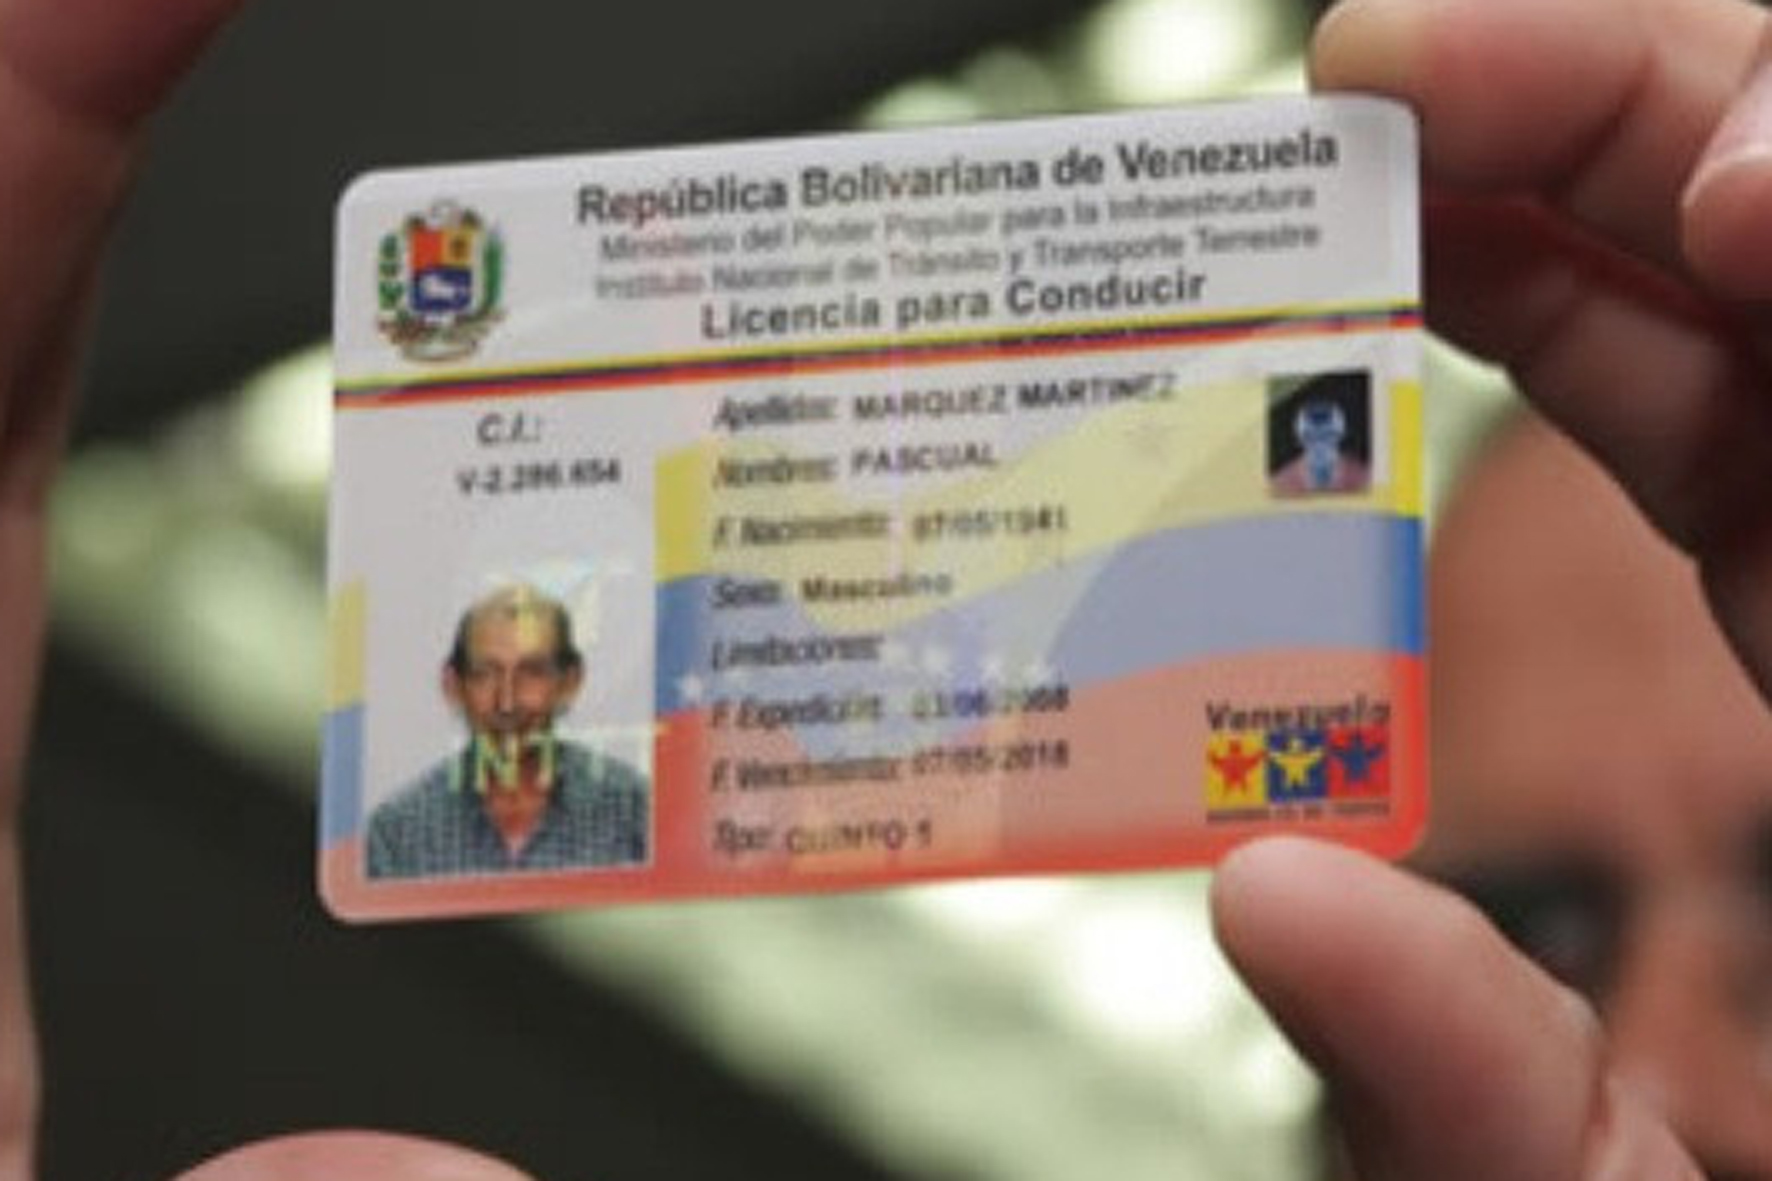 Los venezolanos residentes en España podrán canjear su carnet de conducir a partir de 22 de julio